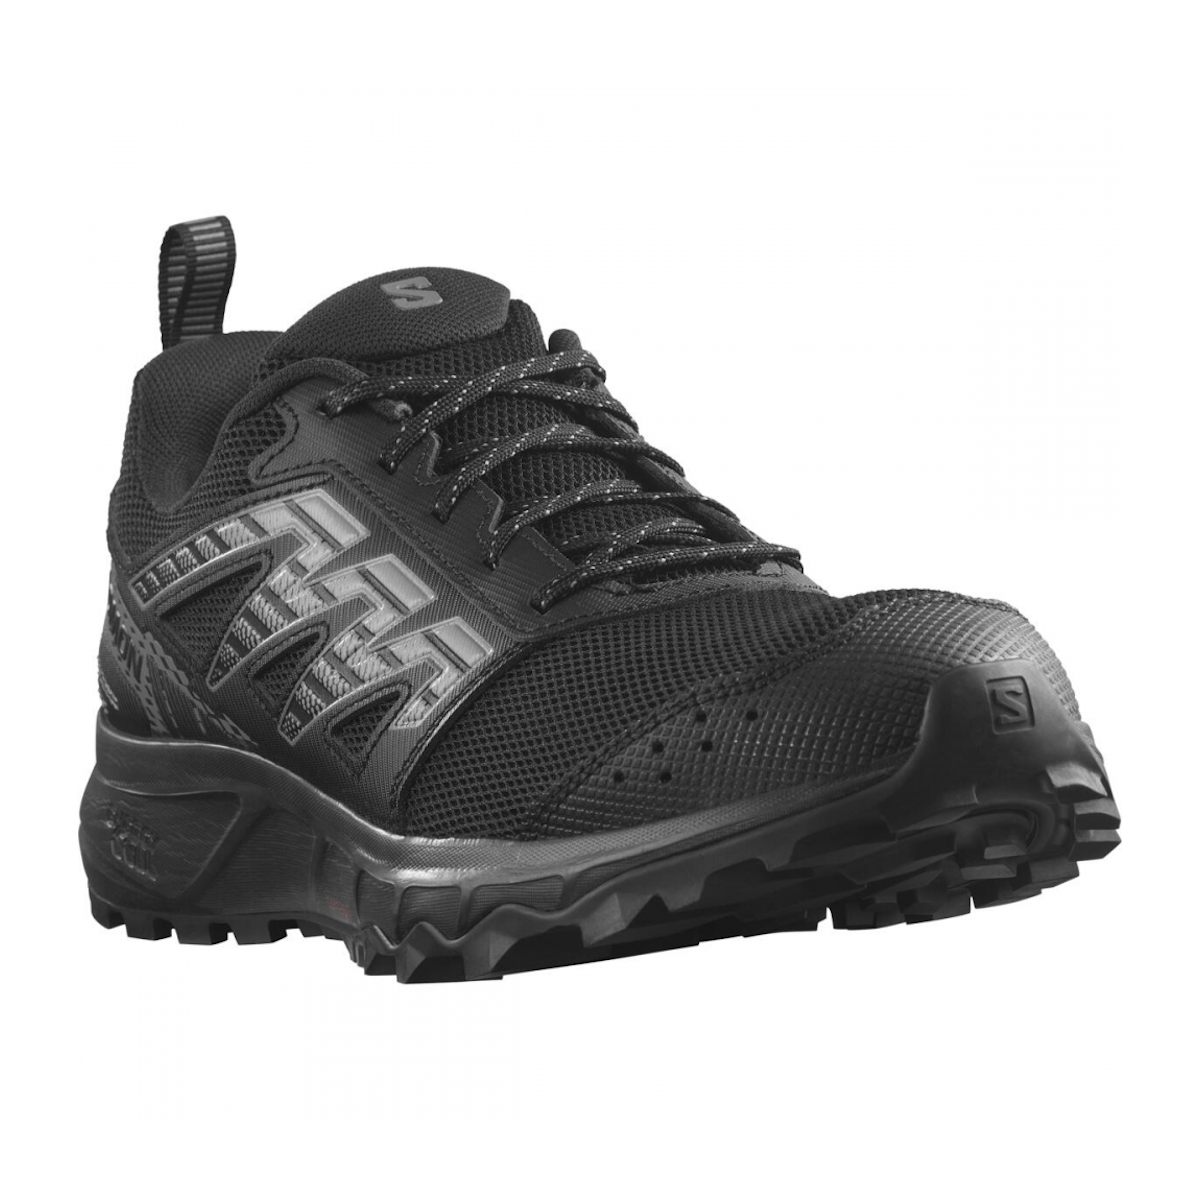 SALOMON WANDER trail running shoes - black/grey